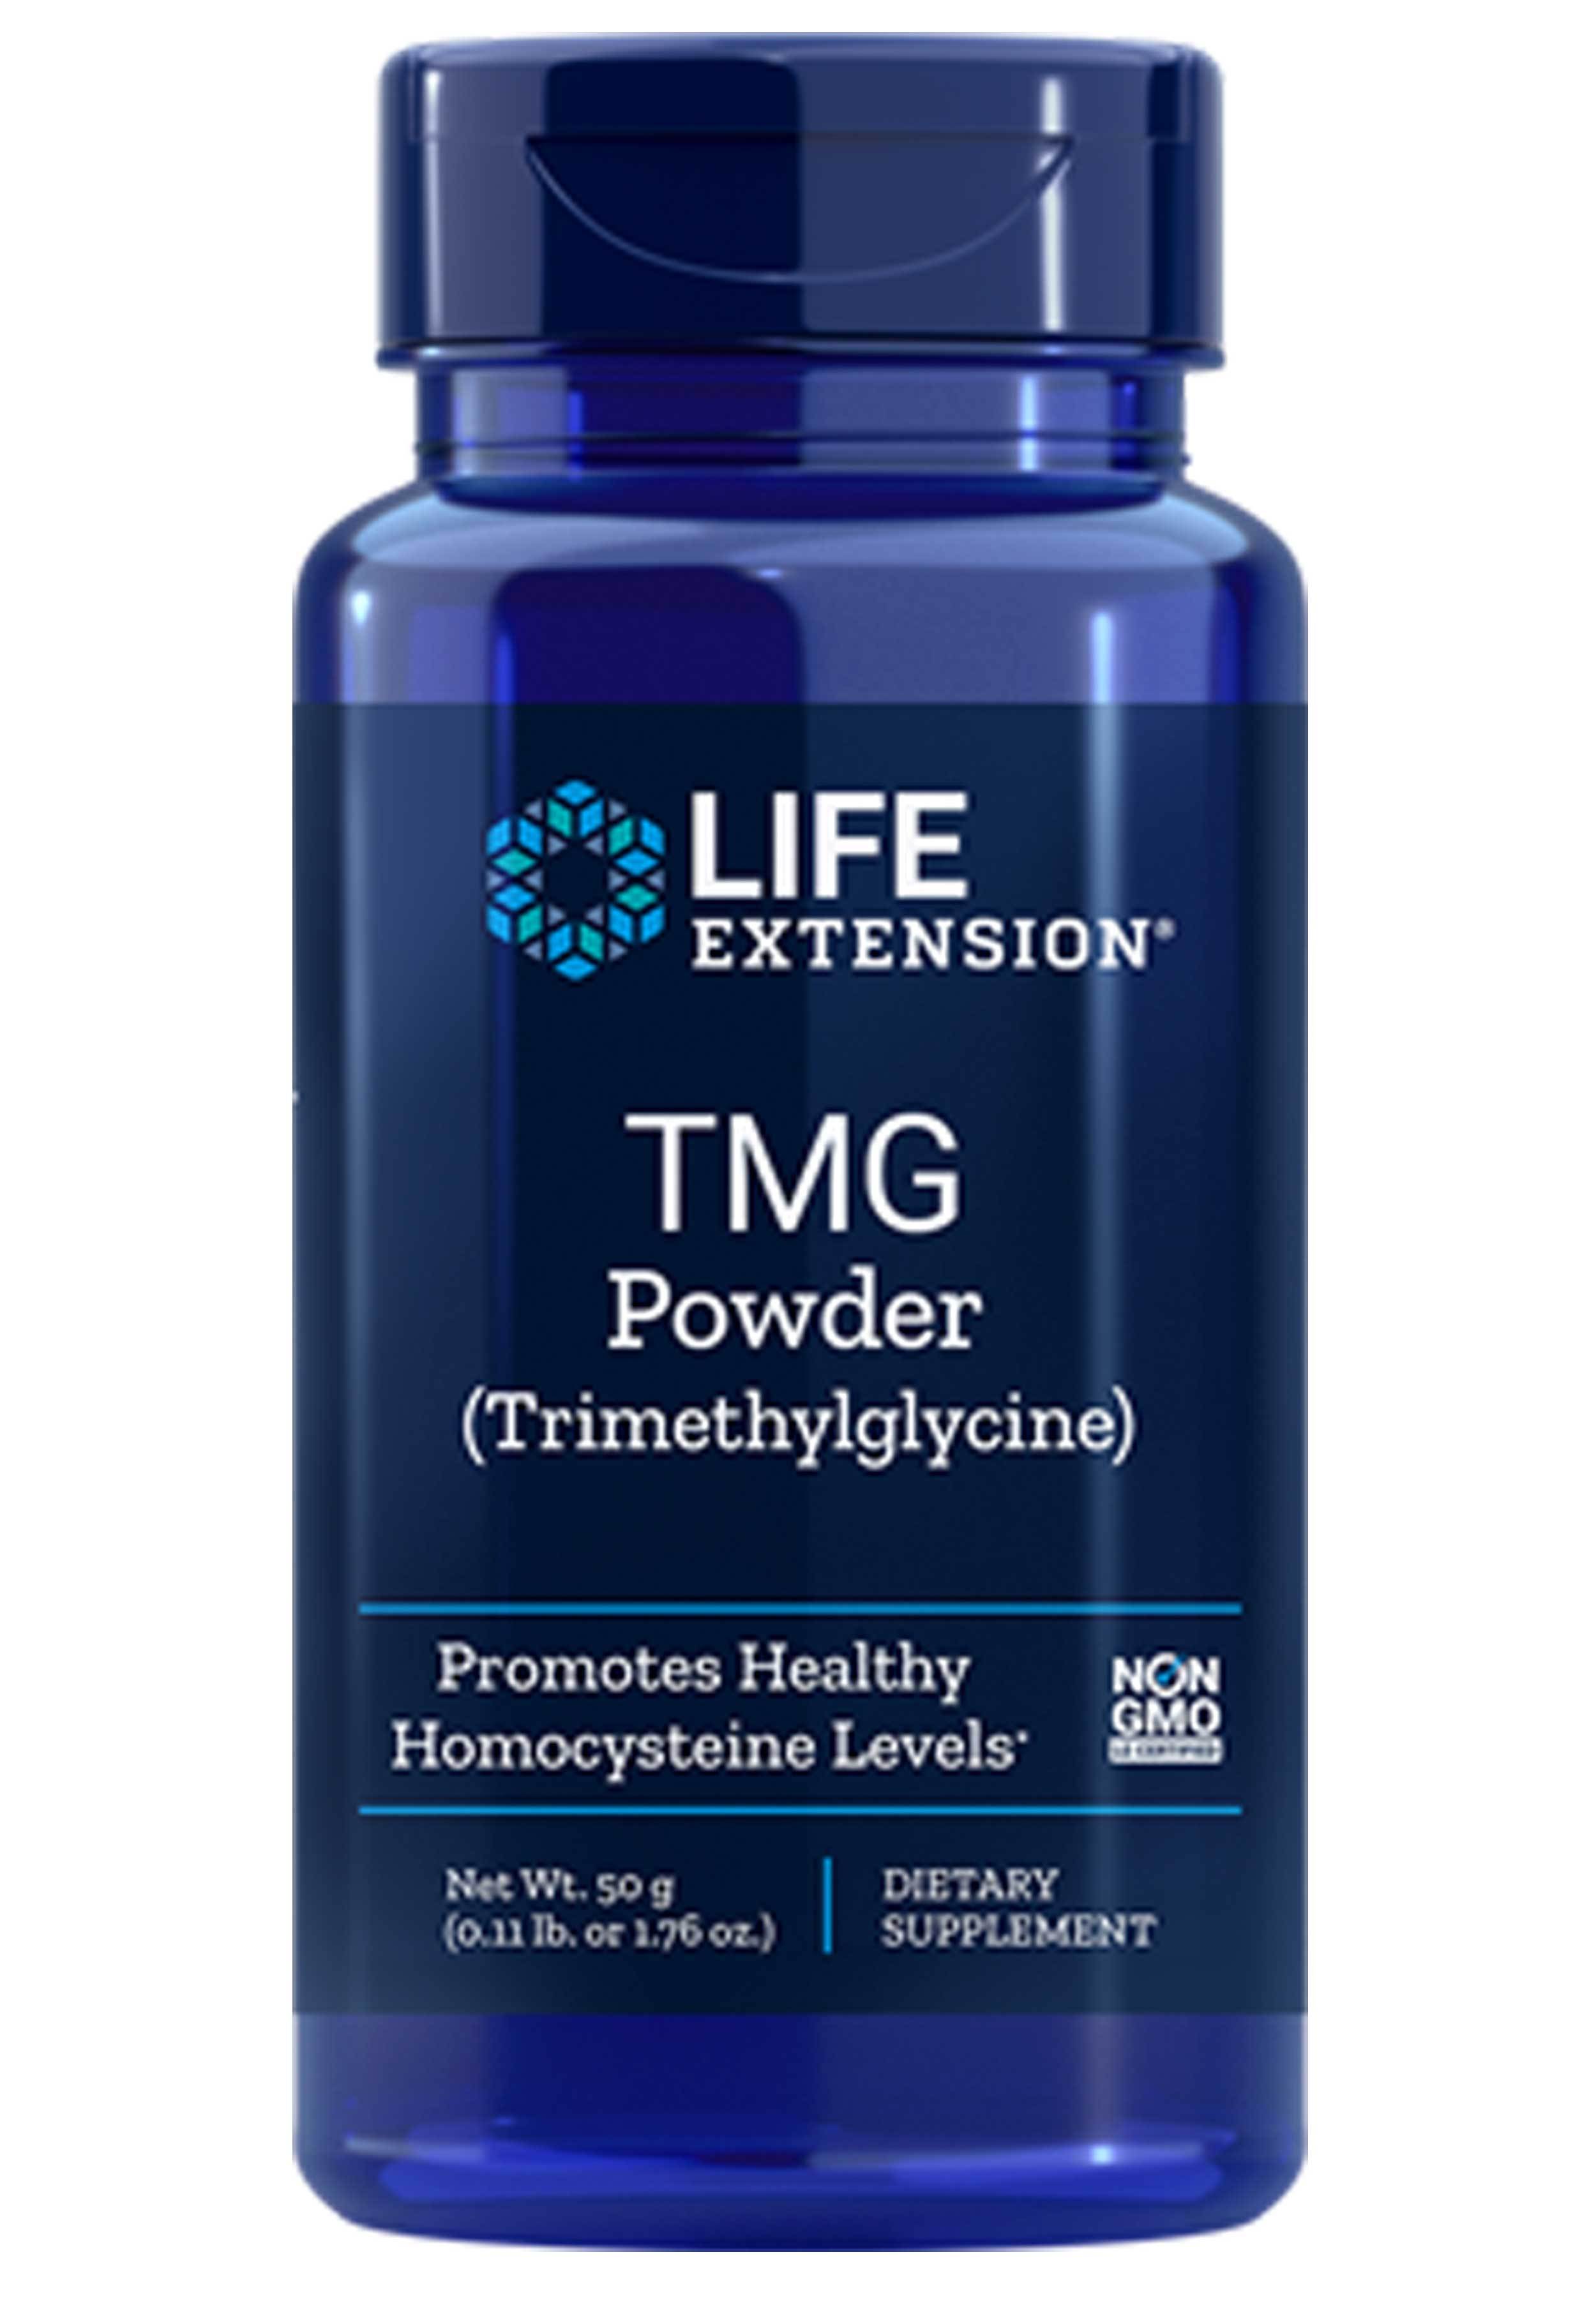 Life Extension TMG Powder (Trimethylglycine)